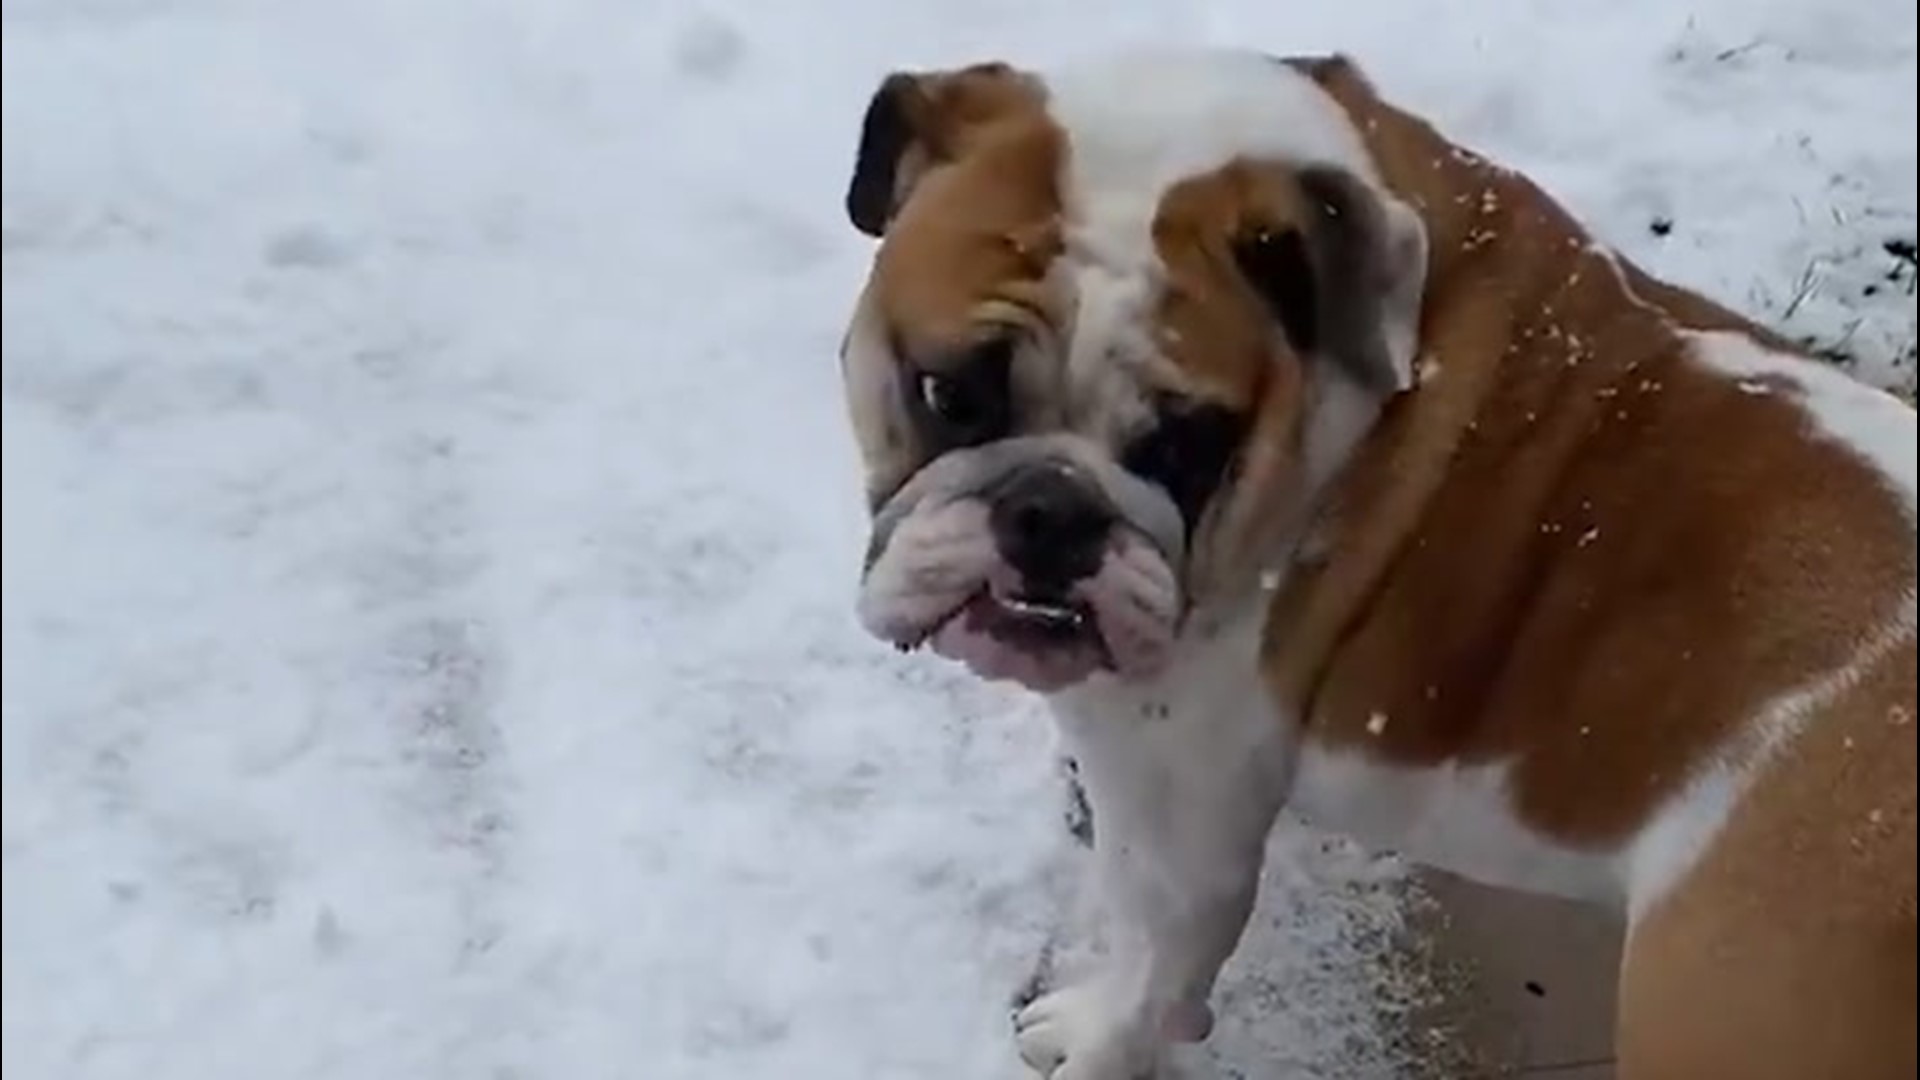 Mr. Truck, the bulldog, went for a trek as fresh snow piled up in Carlisle, Ontario, on Nov. 22.